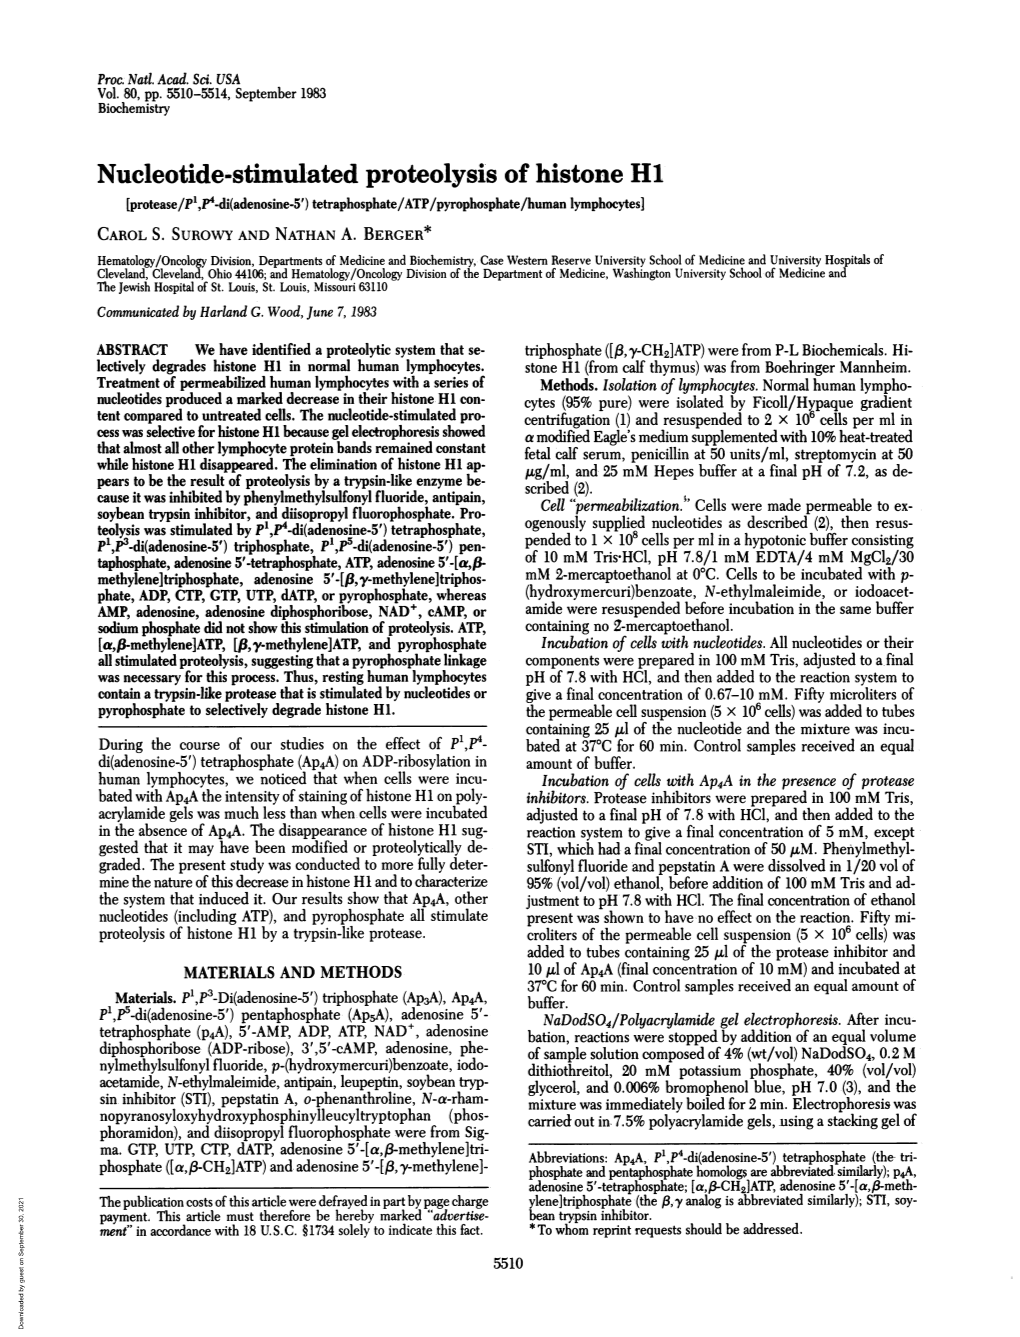 Nucleotide-Stimulated Proteolysis of Histone H1 [Protease/P',P4-Di(Adenosine-5') Tetraphosphate/ATP/Pyrophosphate/Human Lymphocytes] CAROL S